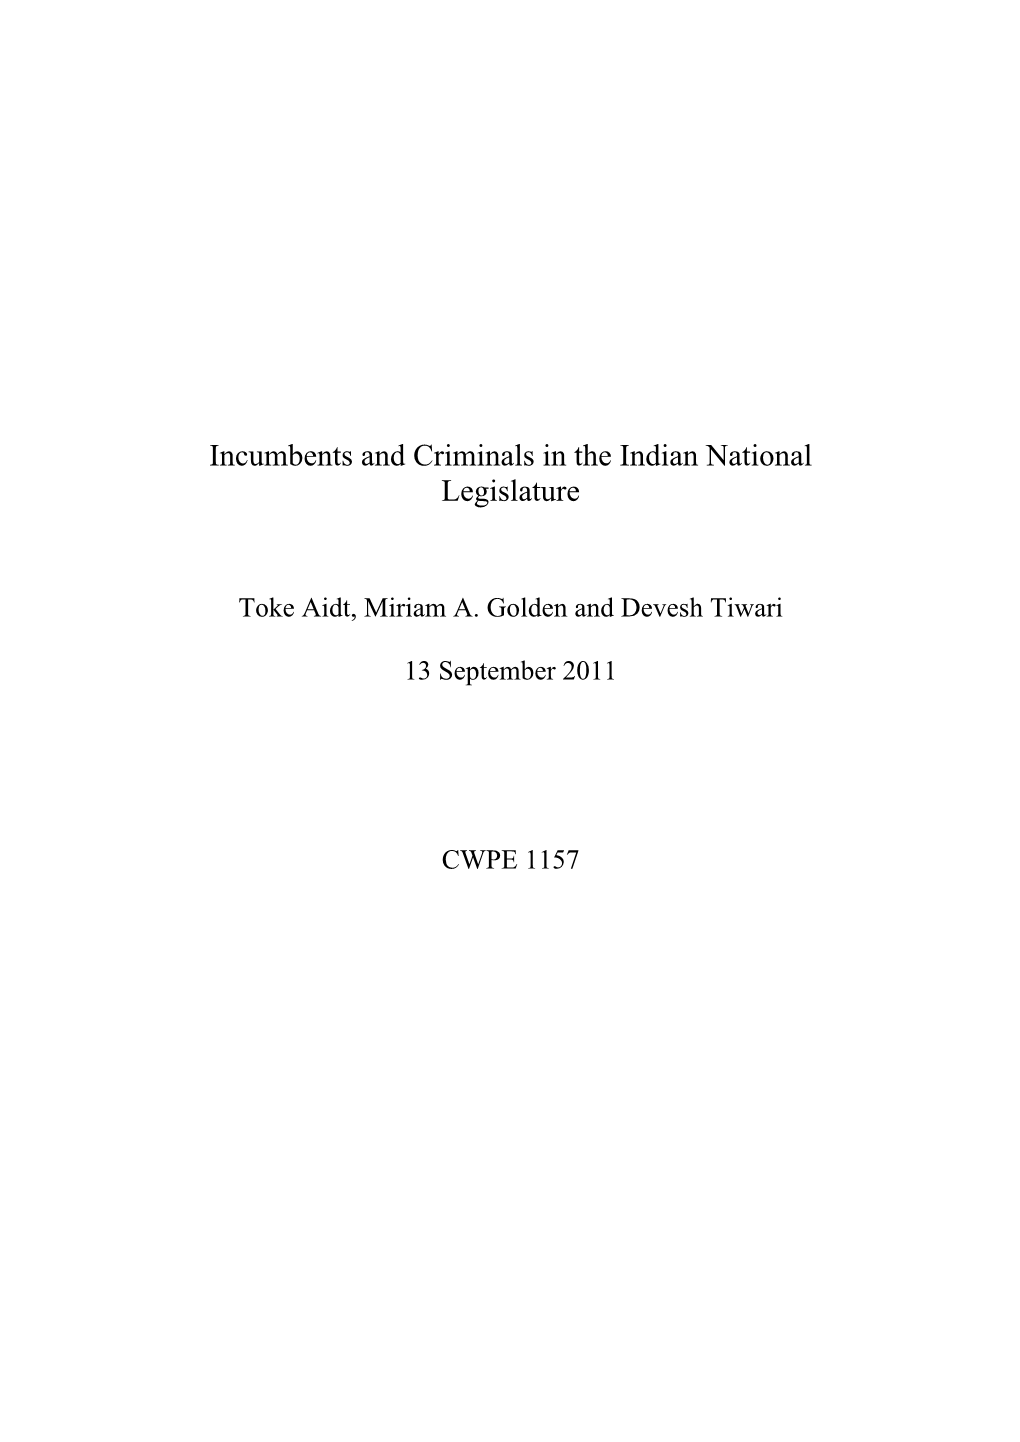 Incumbents and Criminals in the Indian National Legislature